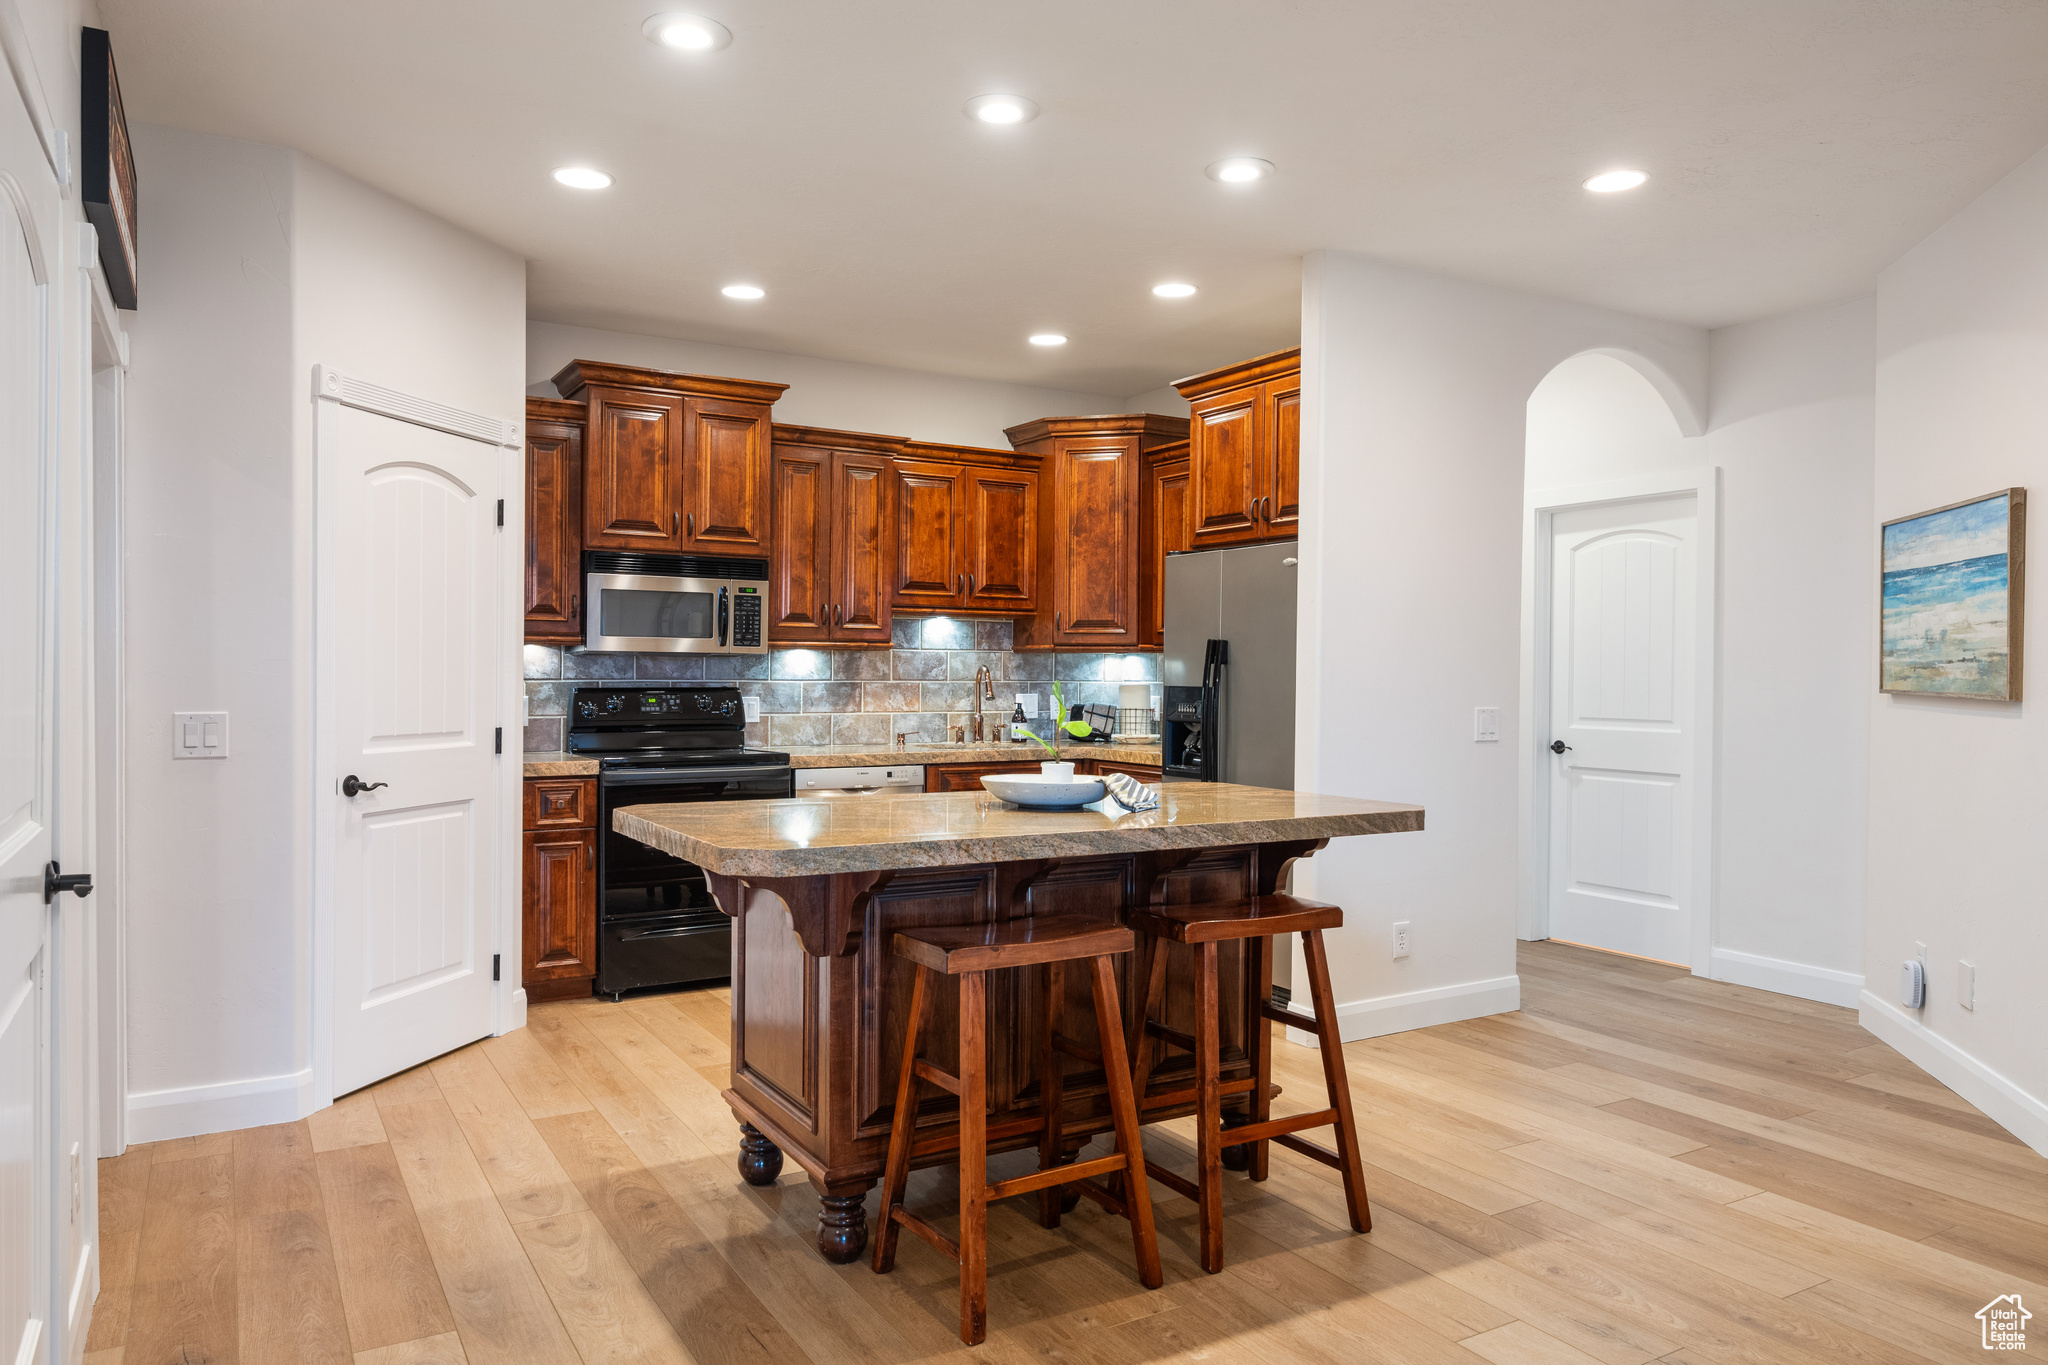 Kitchen featuring light hardwood / wood-style flooring, backsplash, a breakfast bar area, a center island, and stainless steel appliances